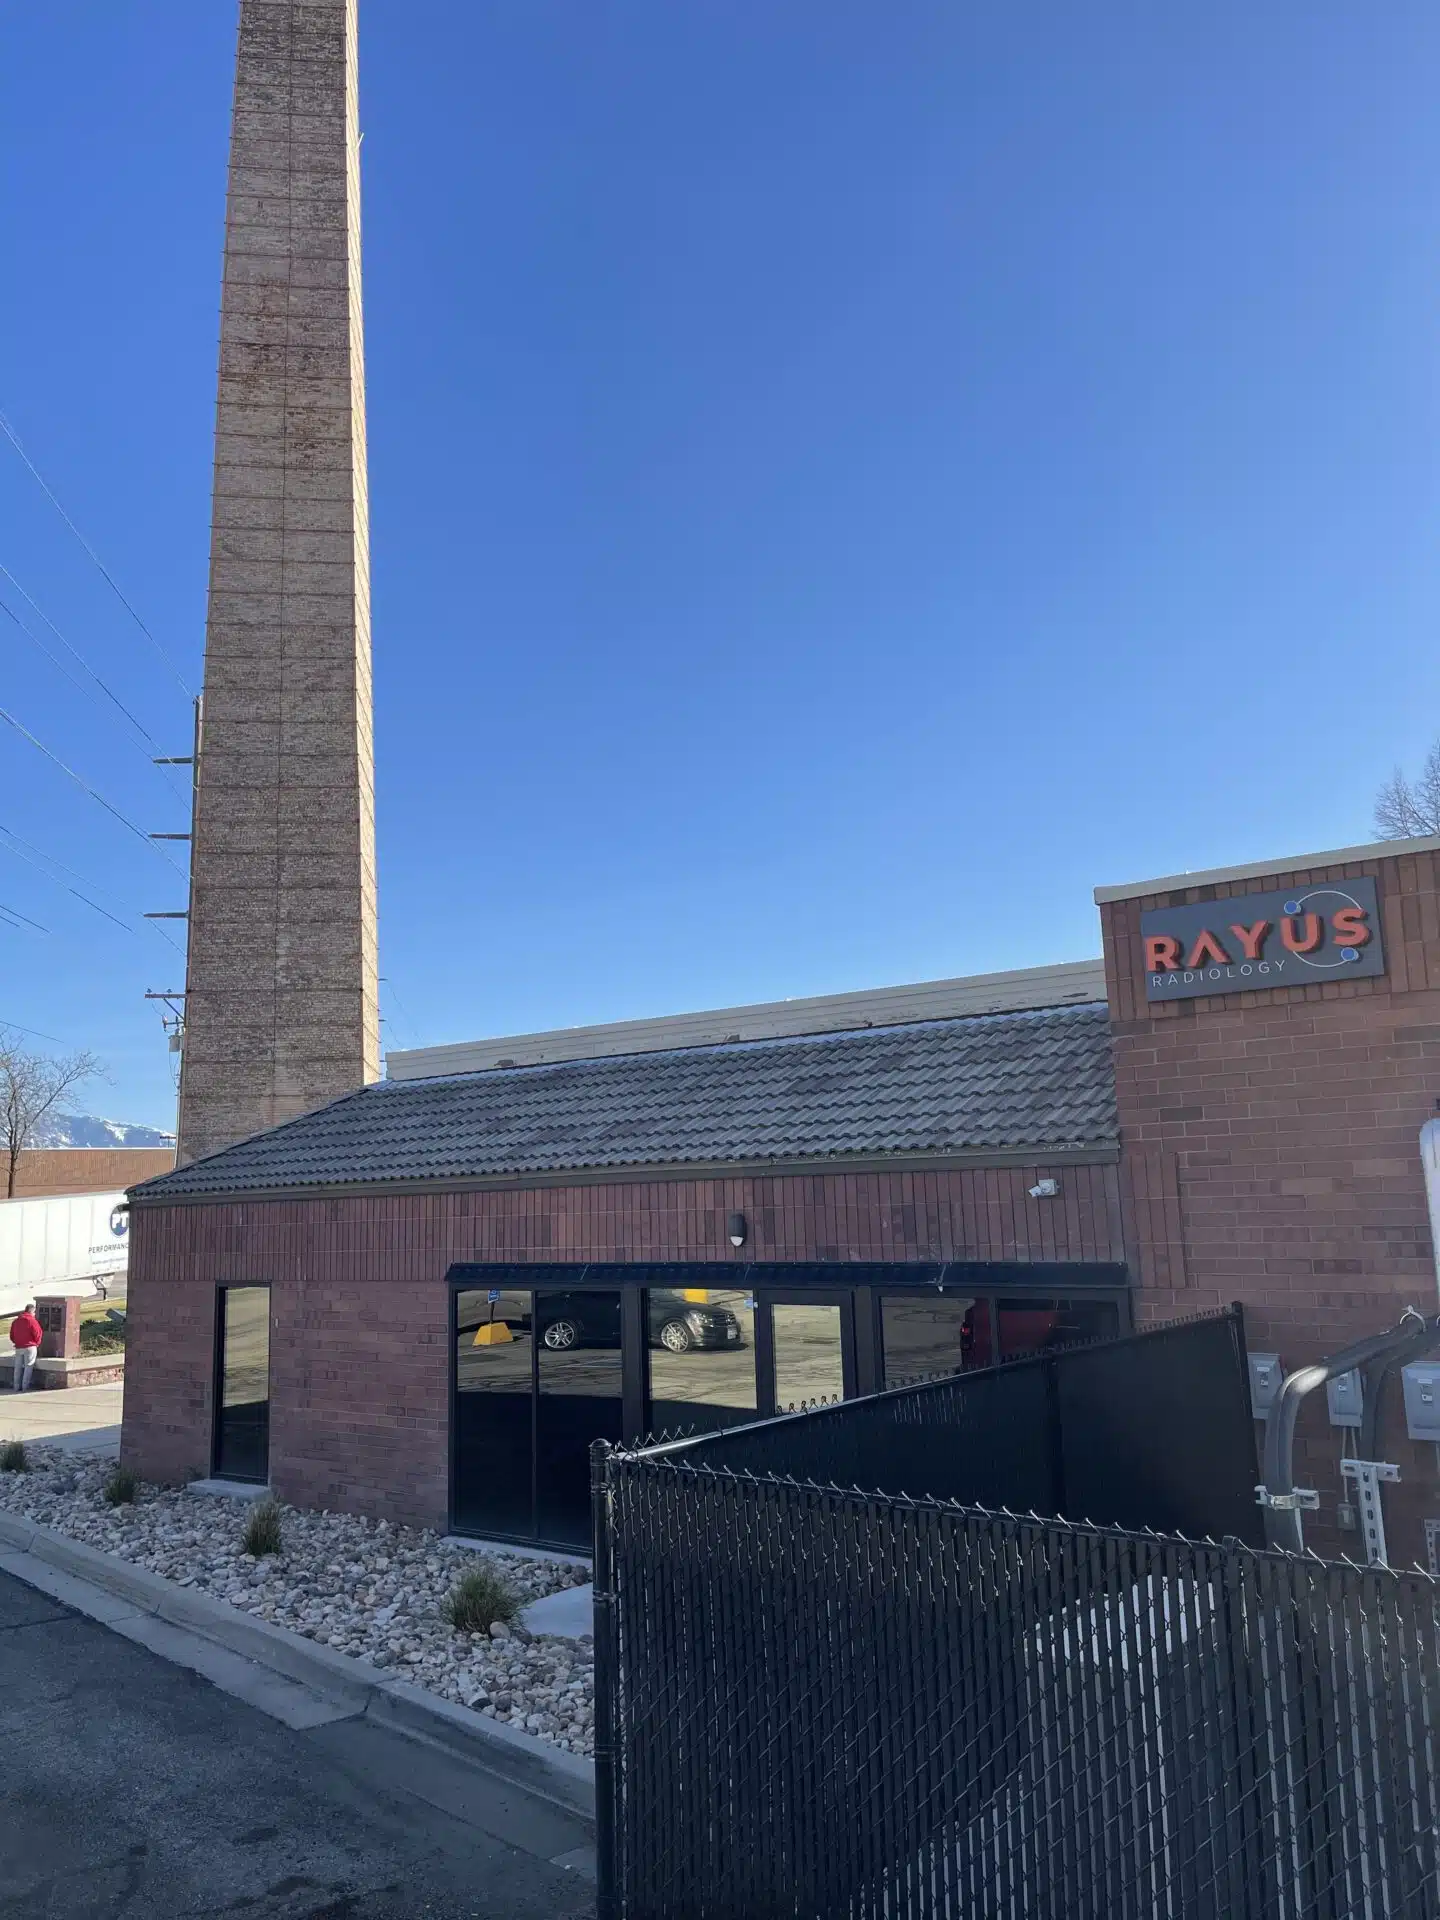 RAYUS Radiology diagnostic imaging center in 1178 Brickyard Rd., Salt Lake City, UT 84106